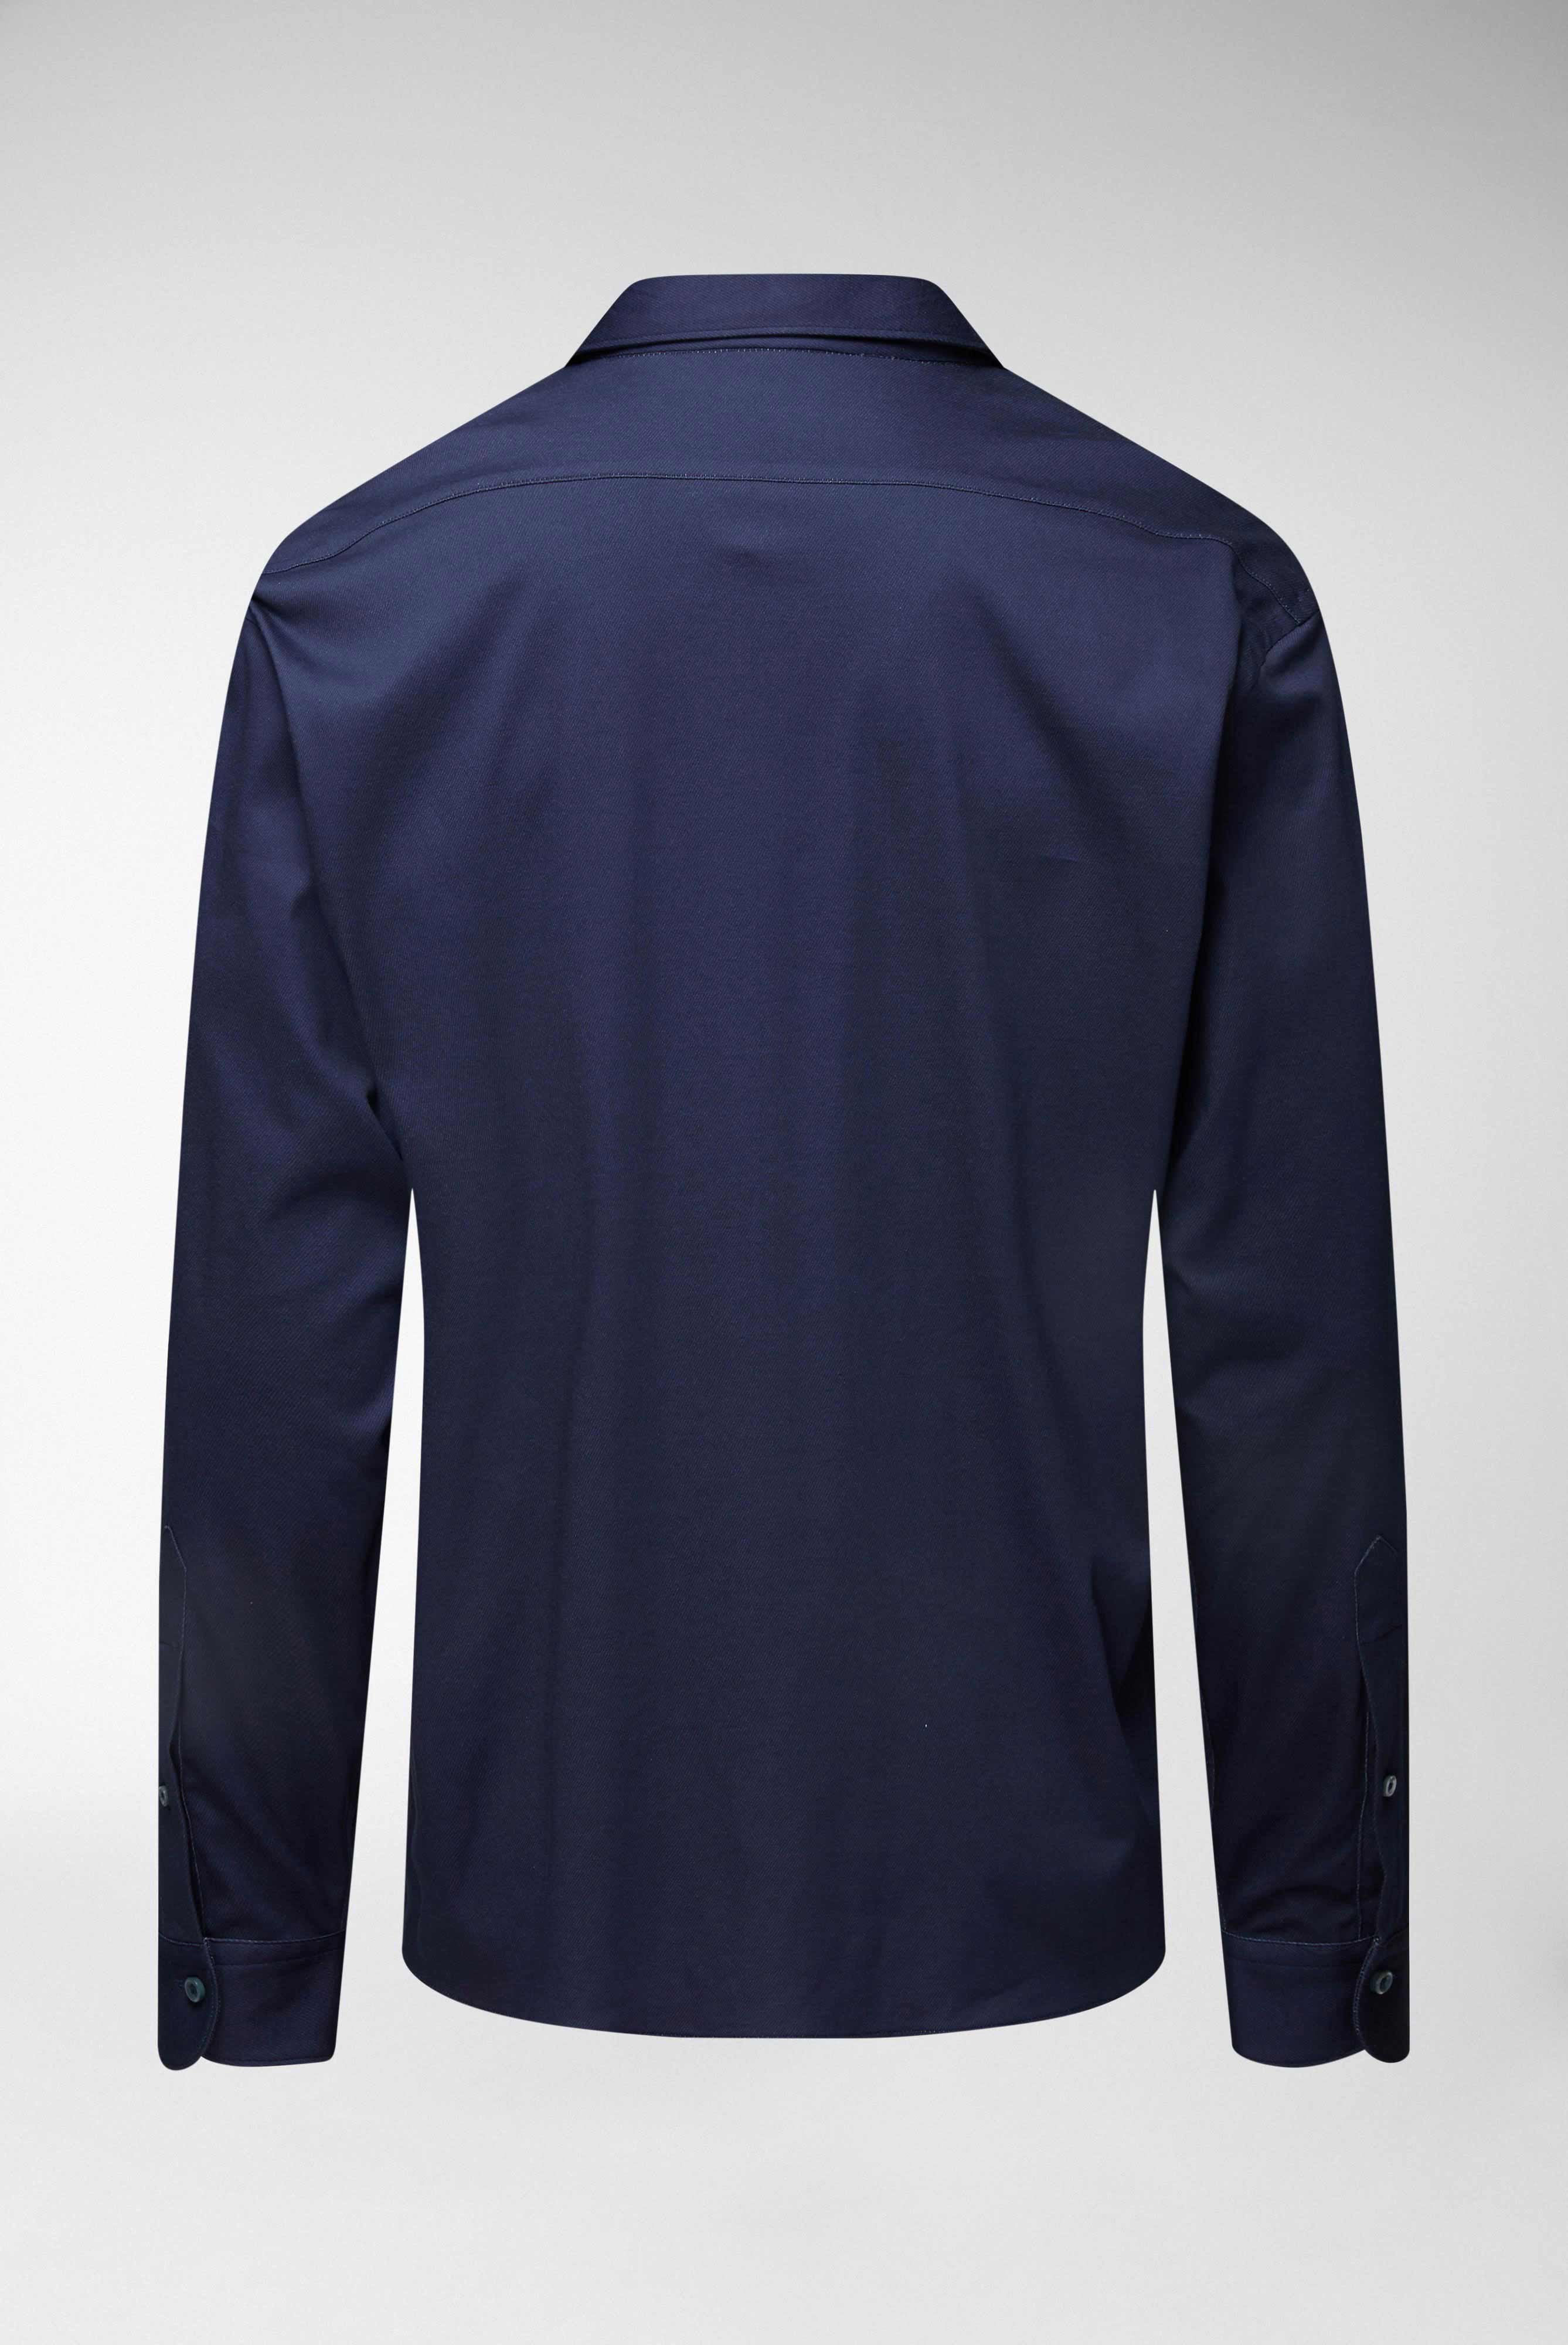 Casual Hemden+Jersey Hemd mit Twill Druck Tailor Fit+20.1683.UC.187749.690.L